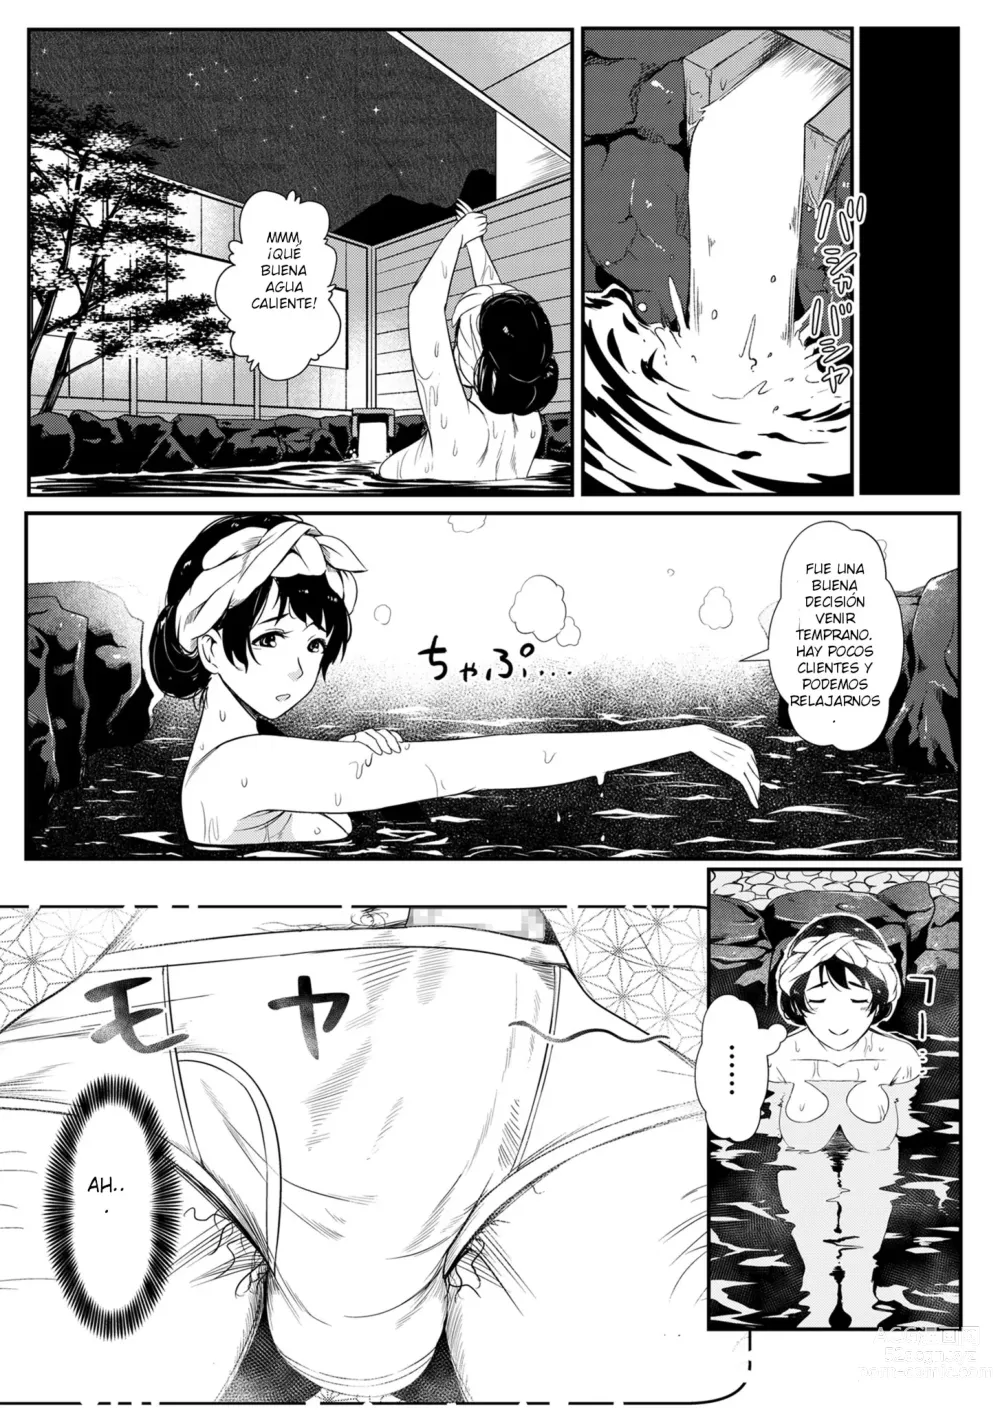 Page 3 of manga Haha wa tabi no owari ni...